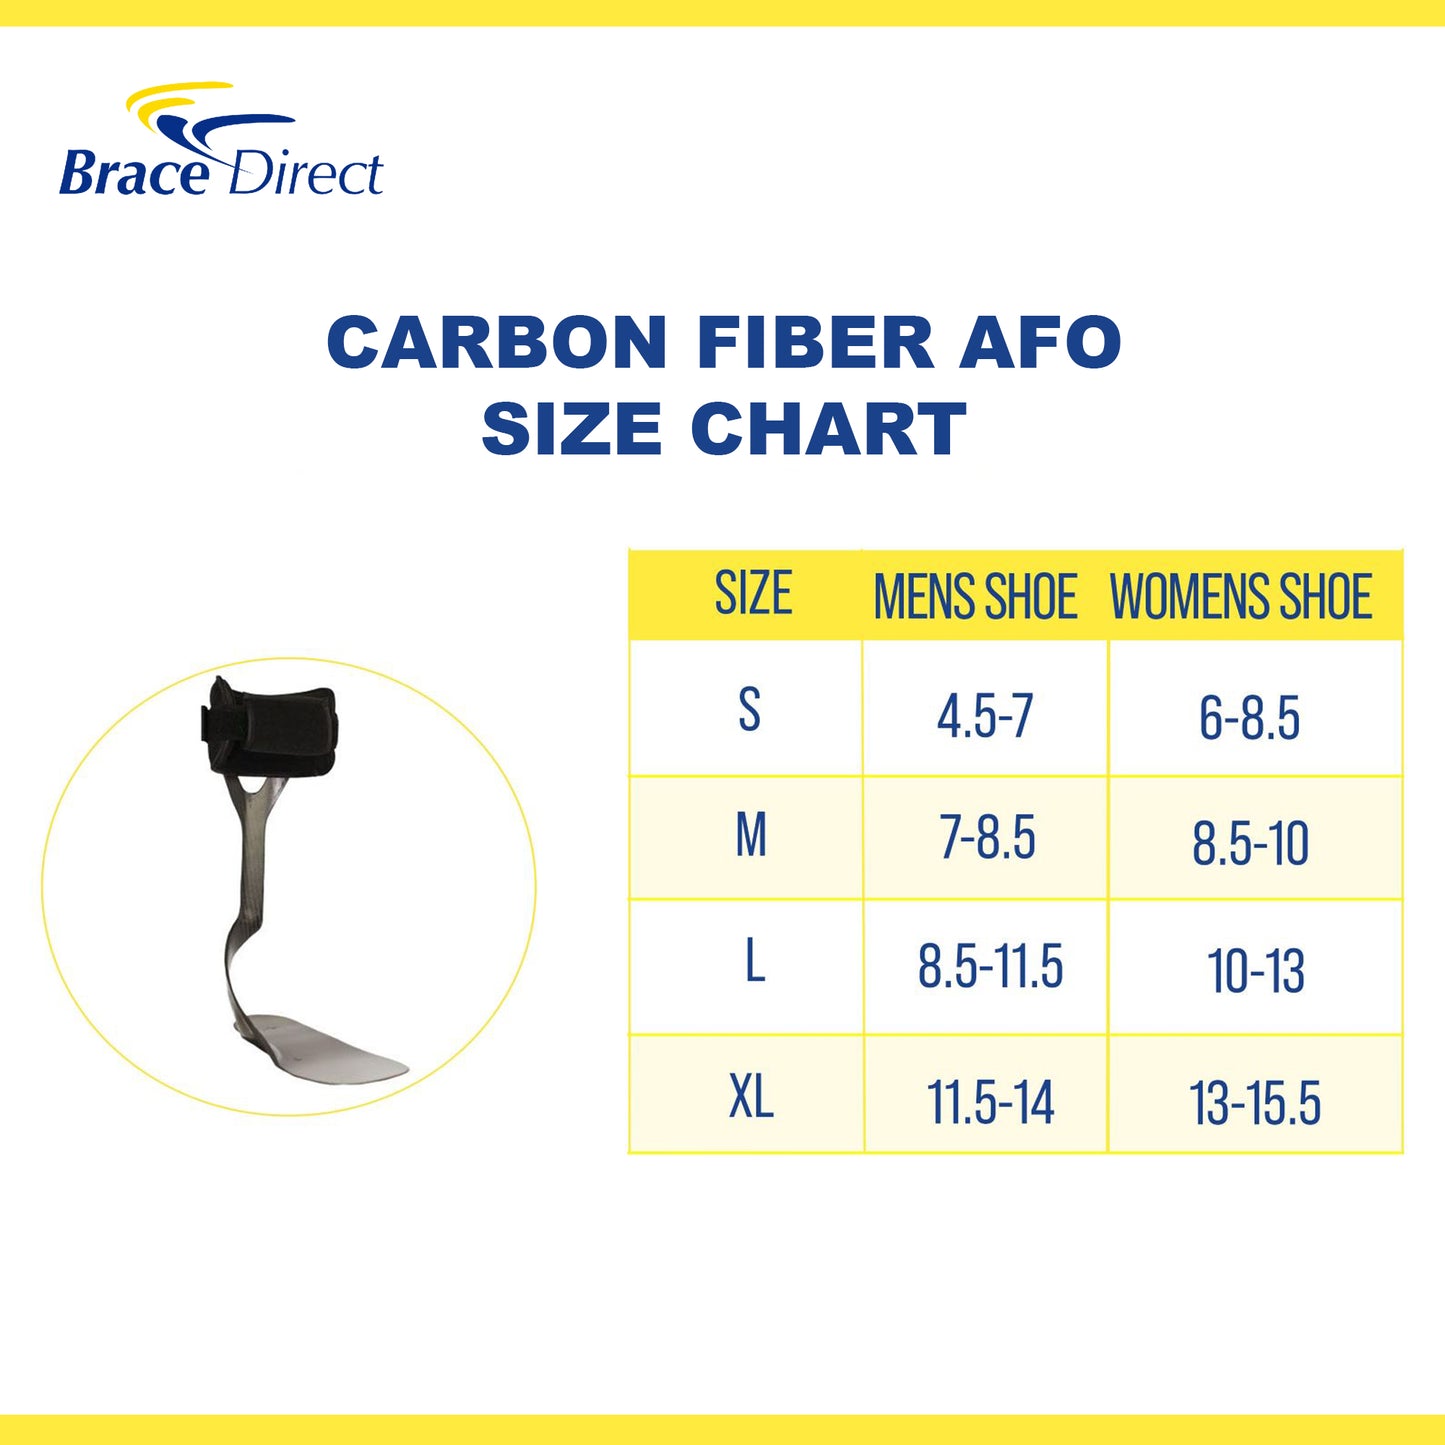 Brace Direct Carbon Fiber AFO